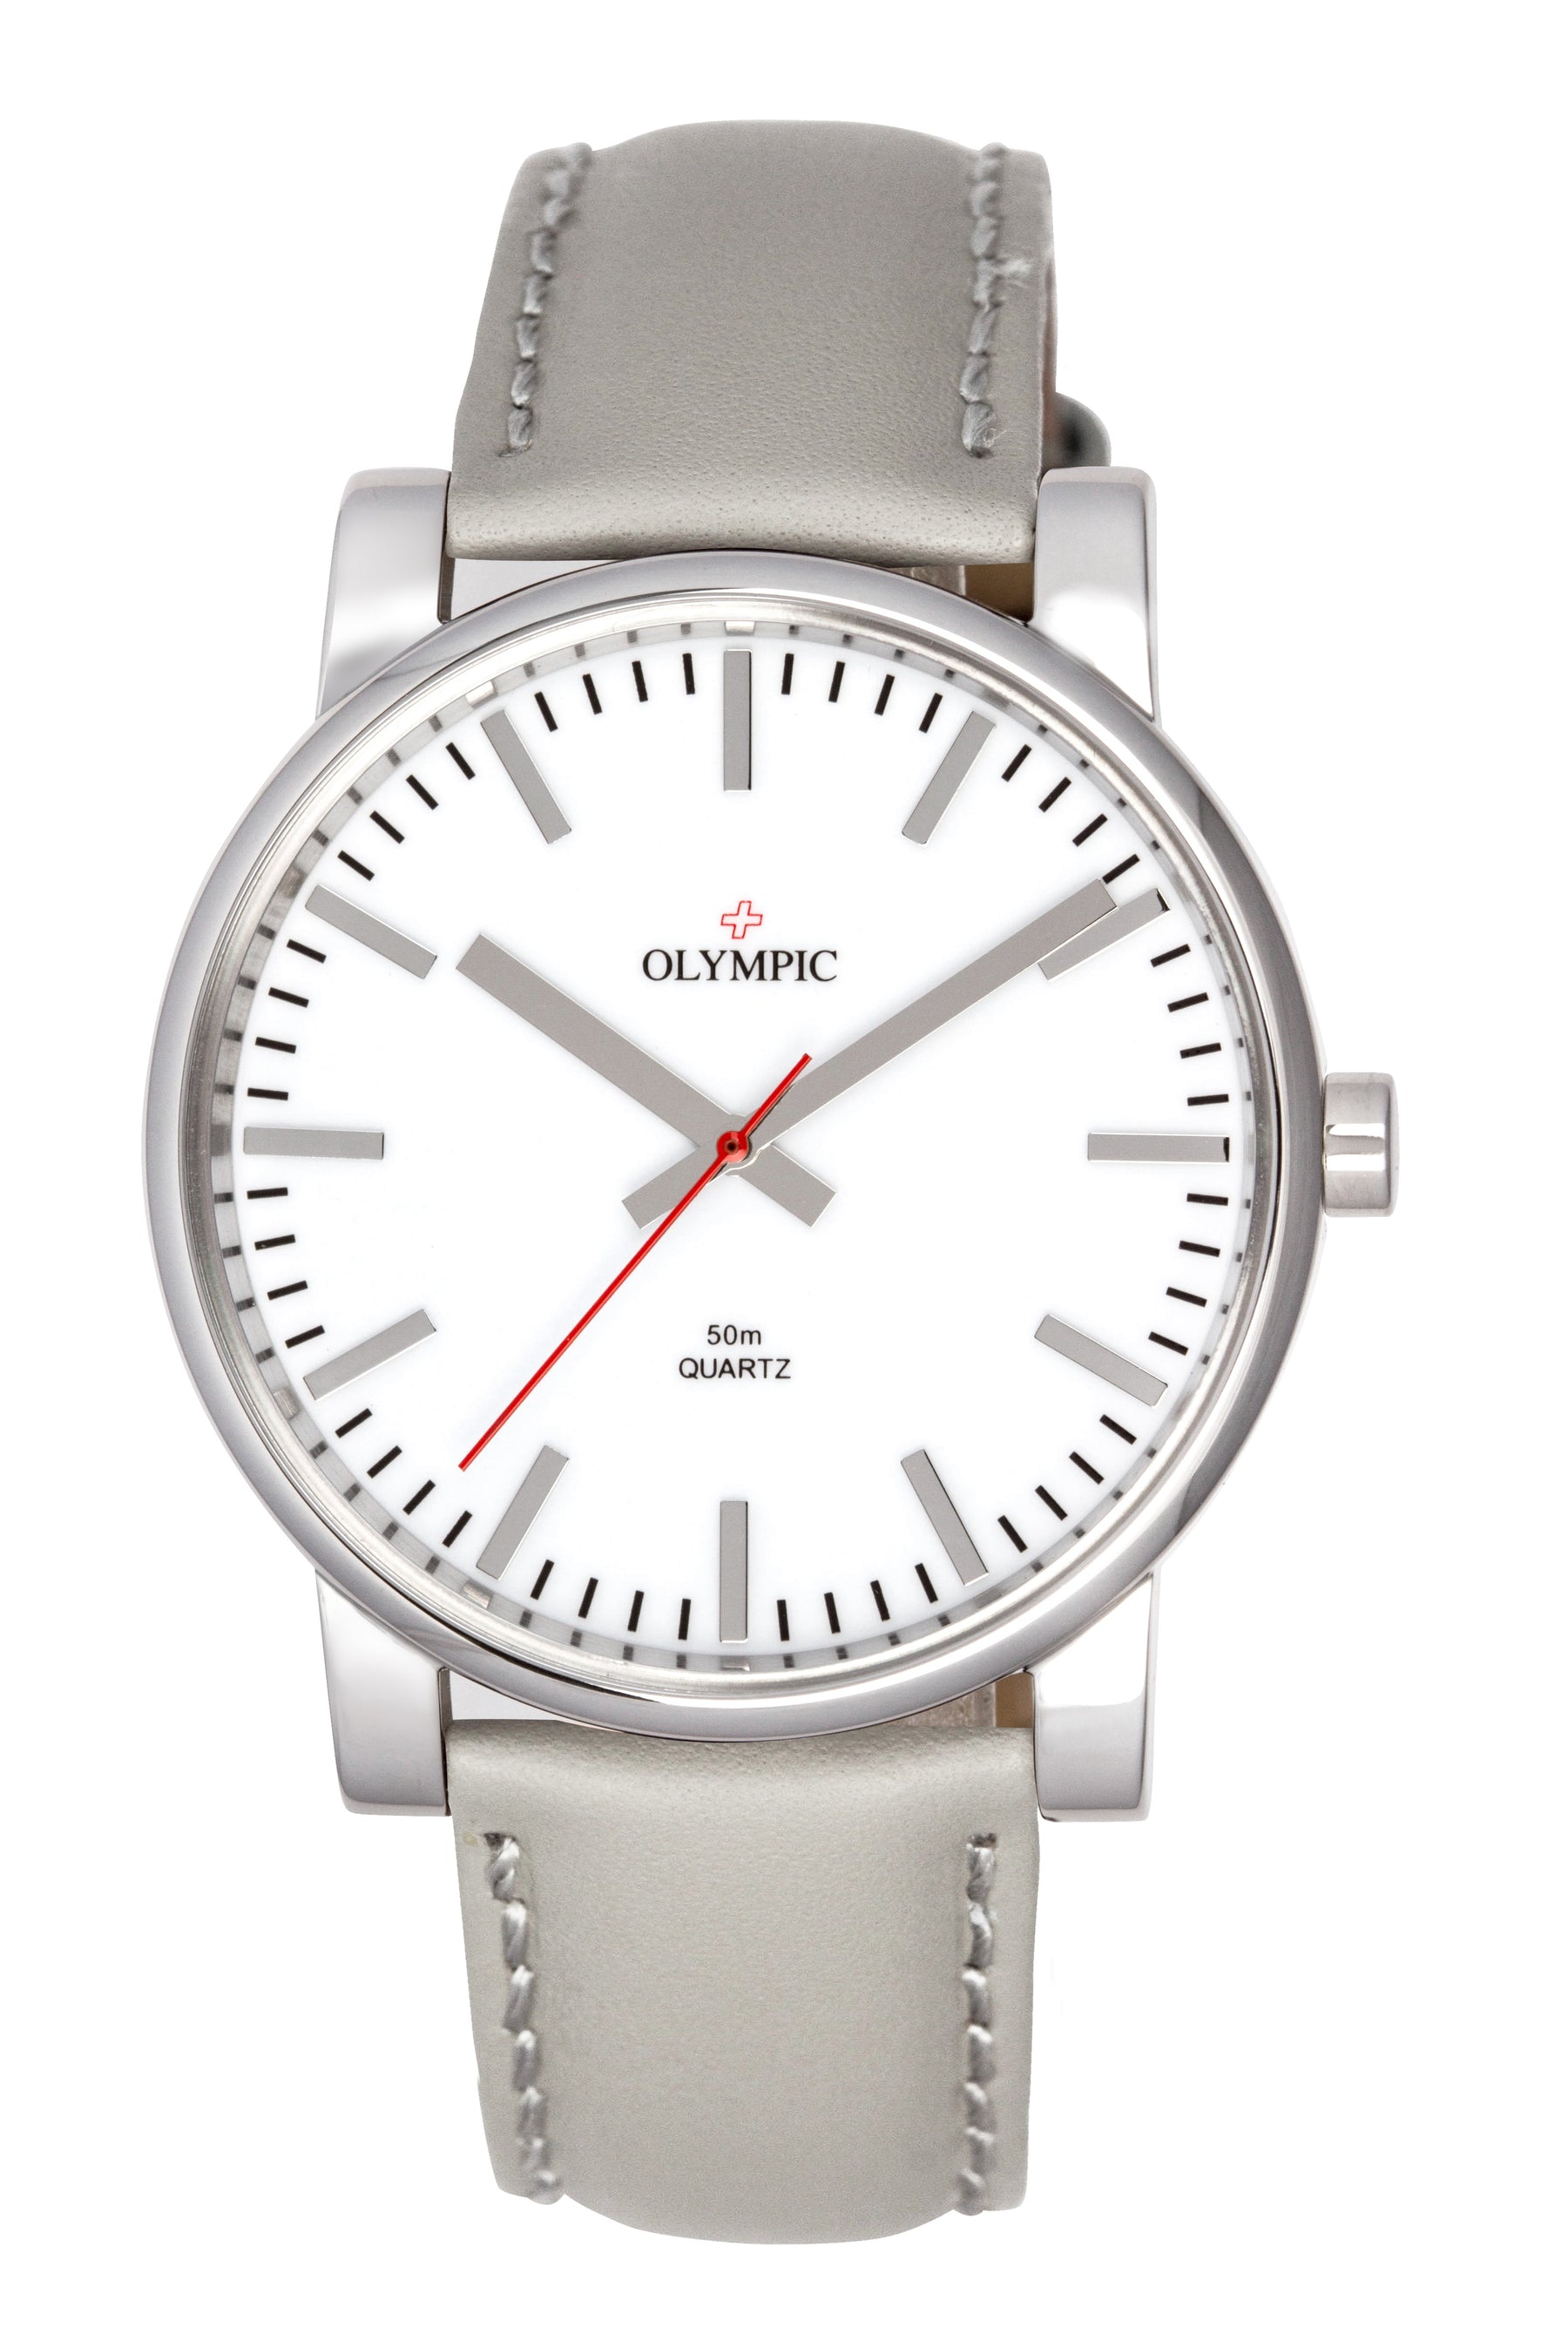 Olympic - Precision Watch Company